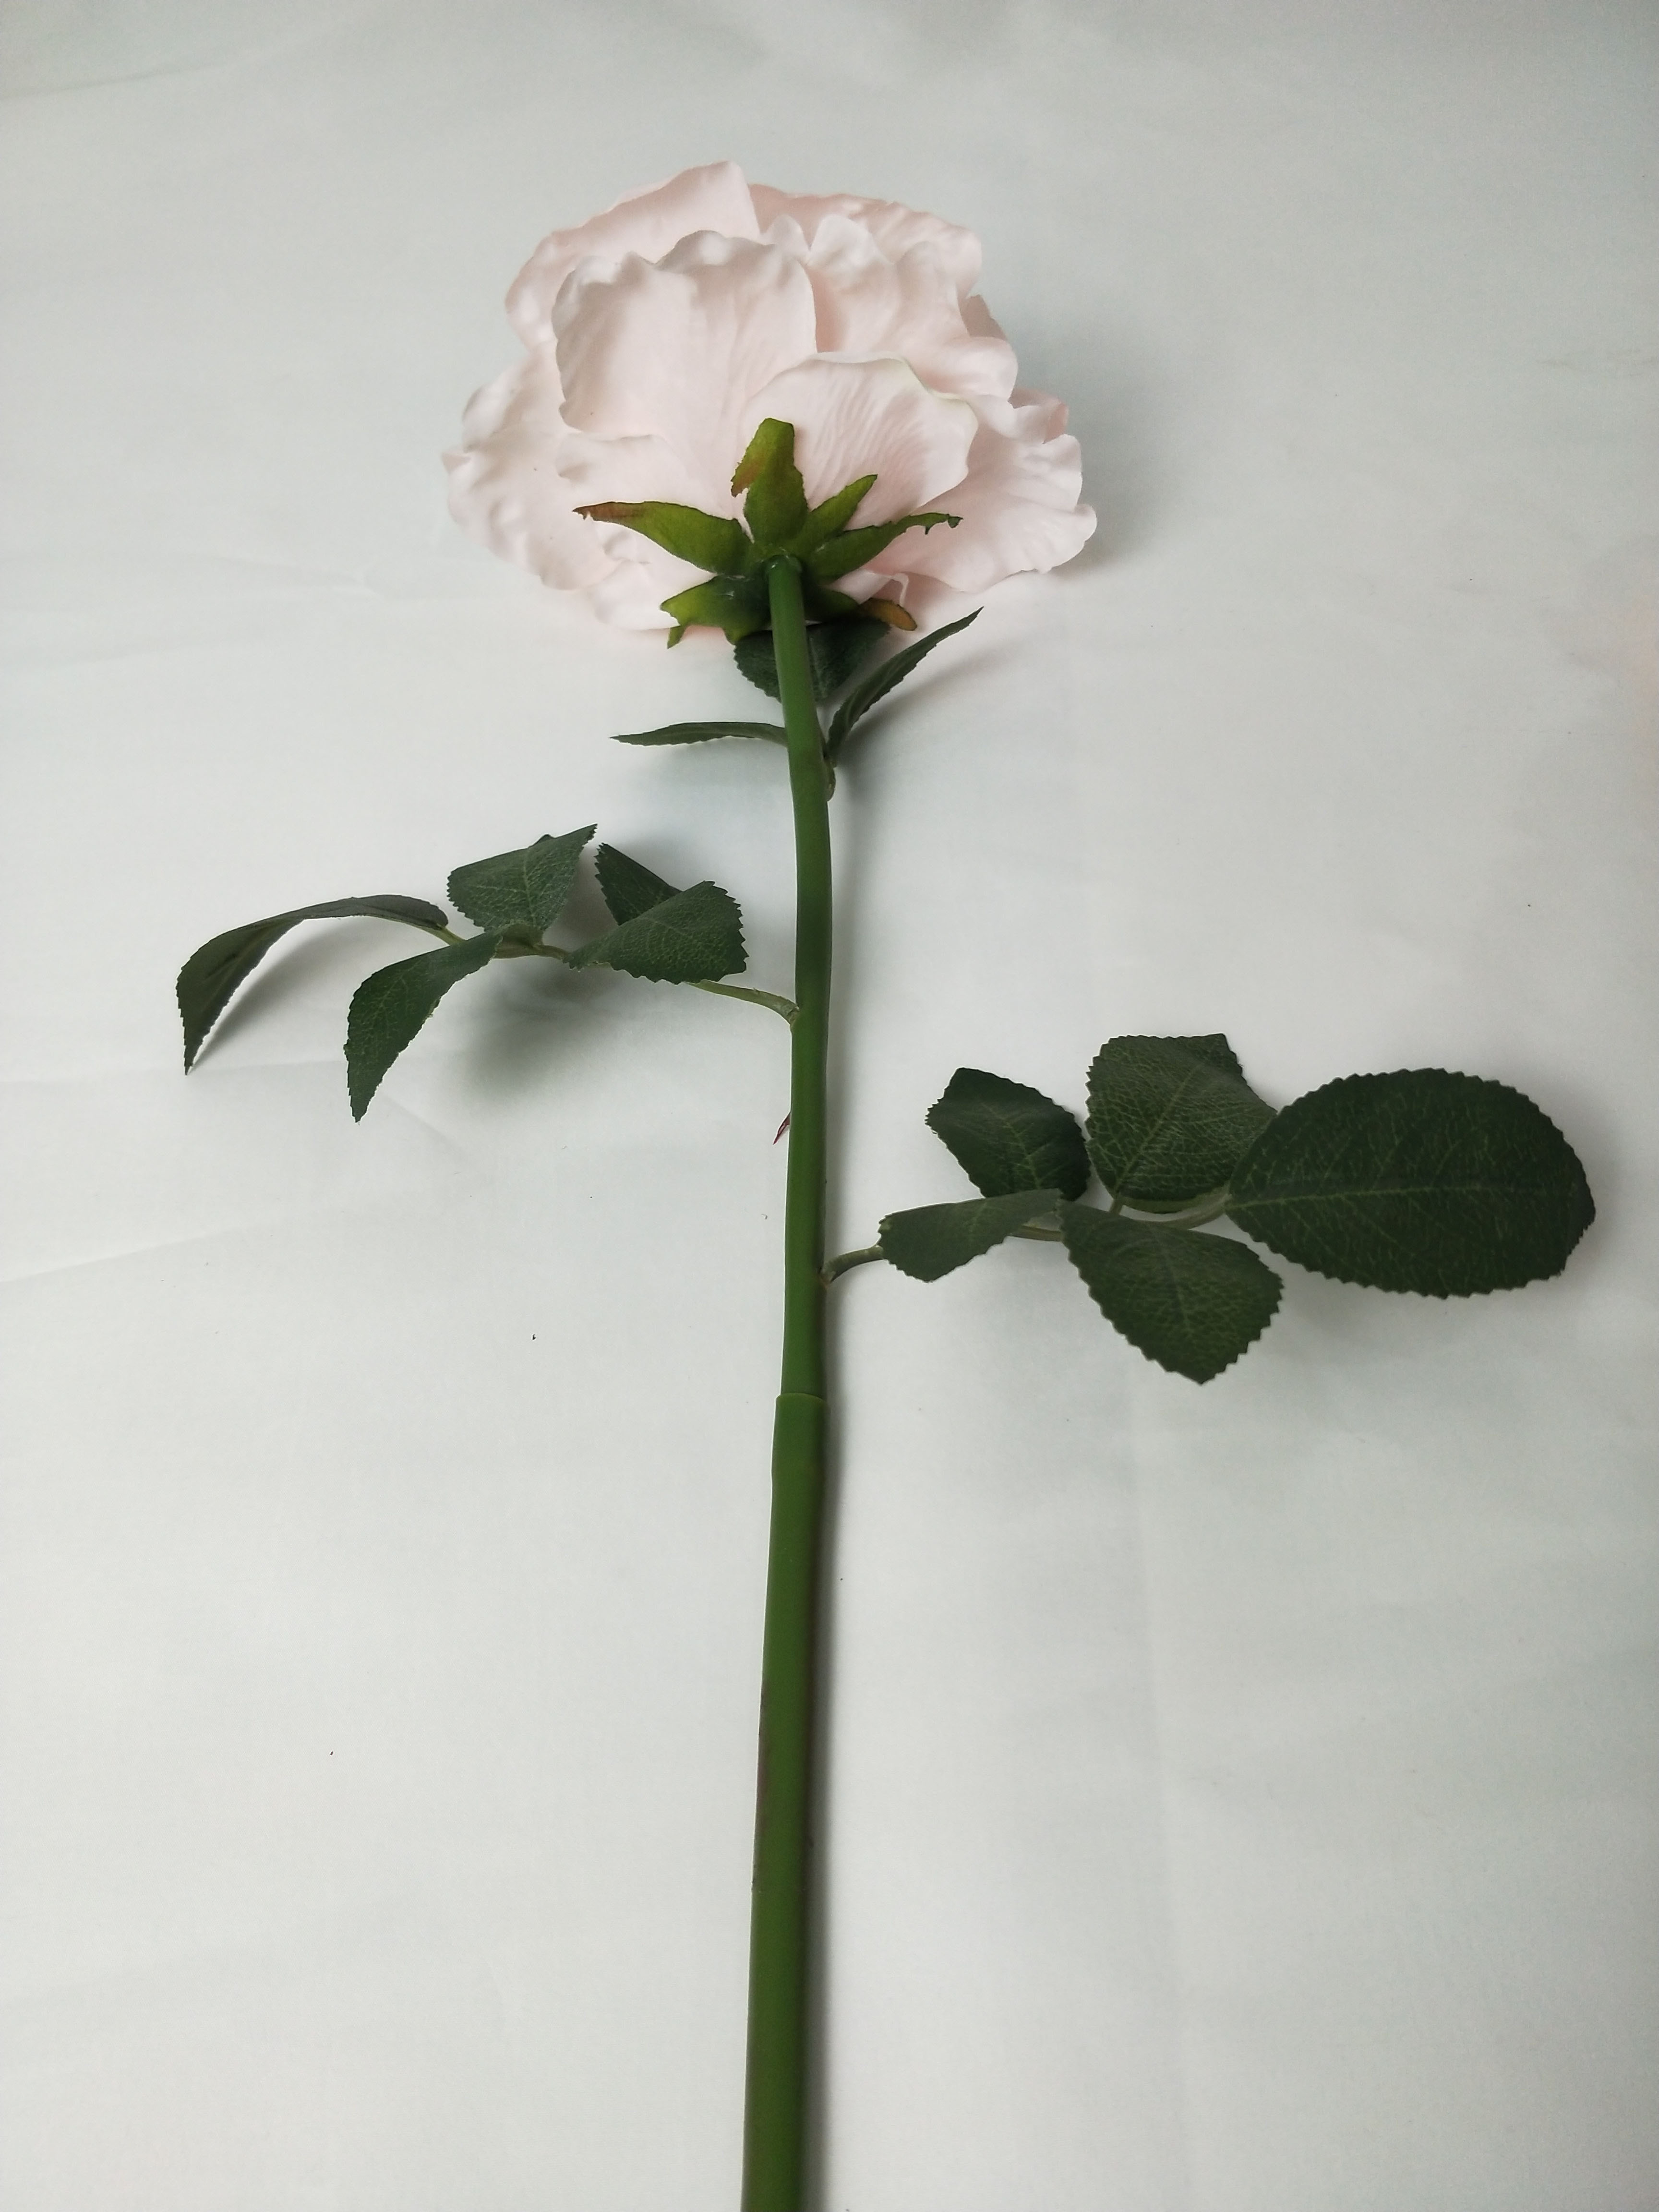 Single New Wrinkled Large Rose